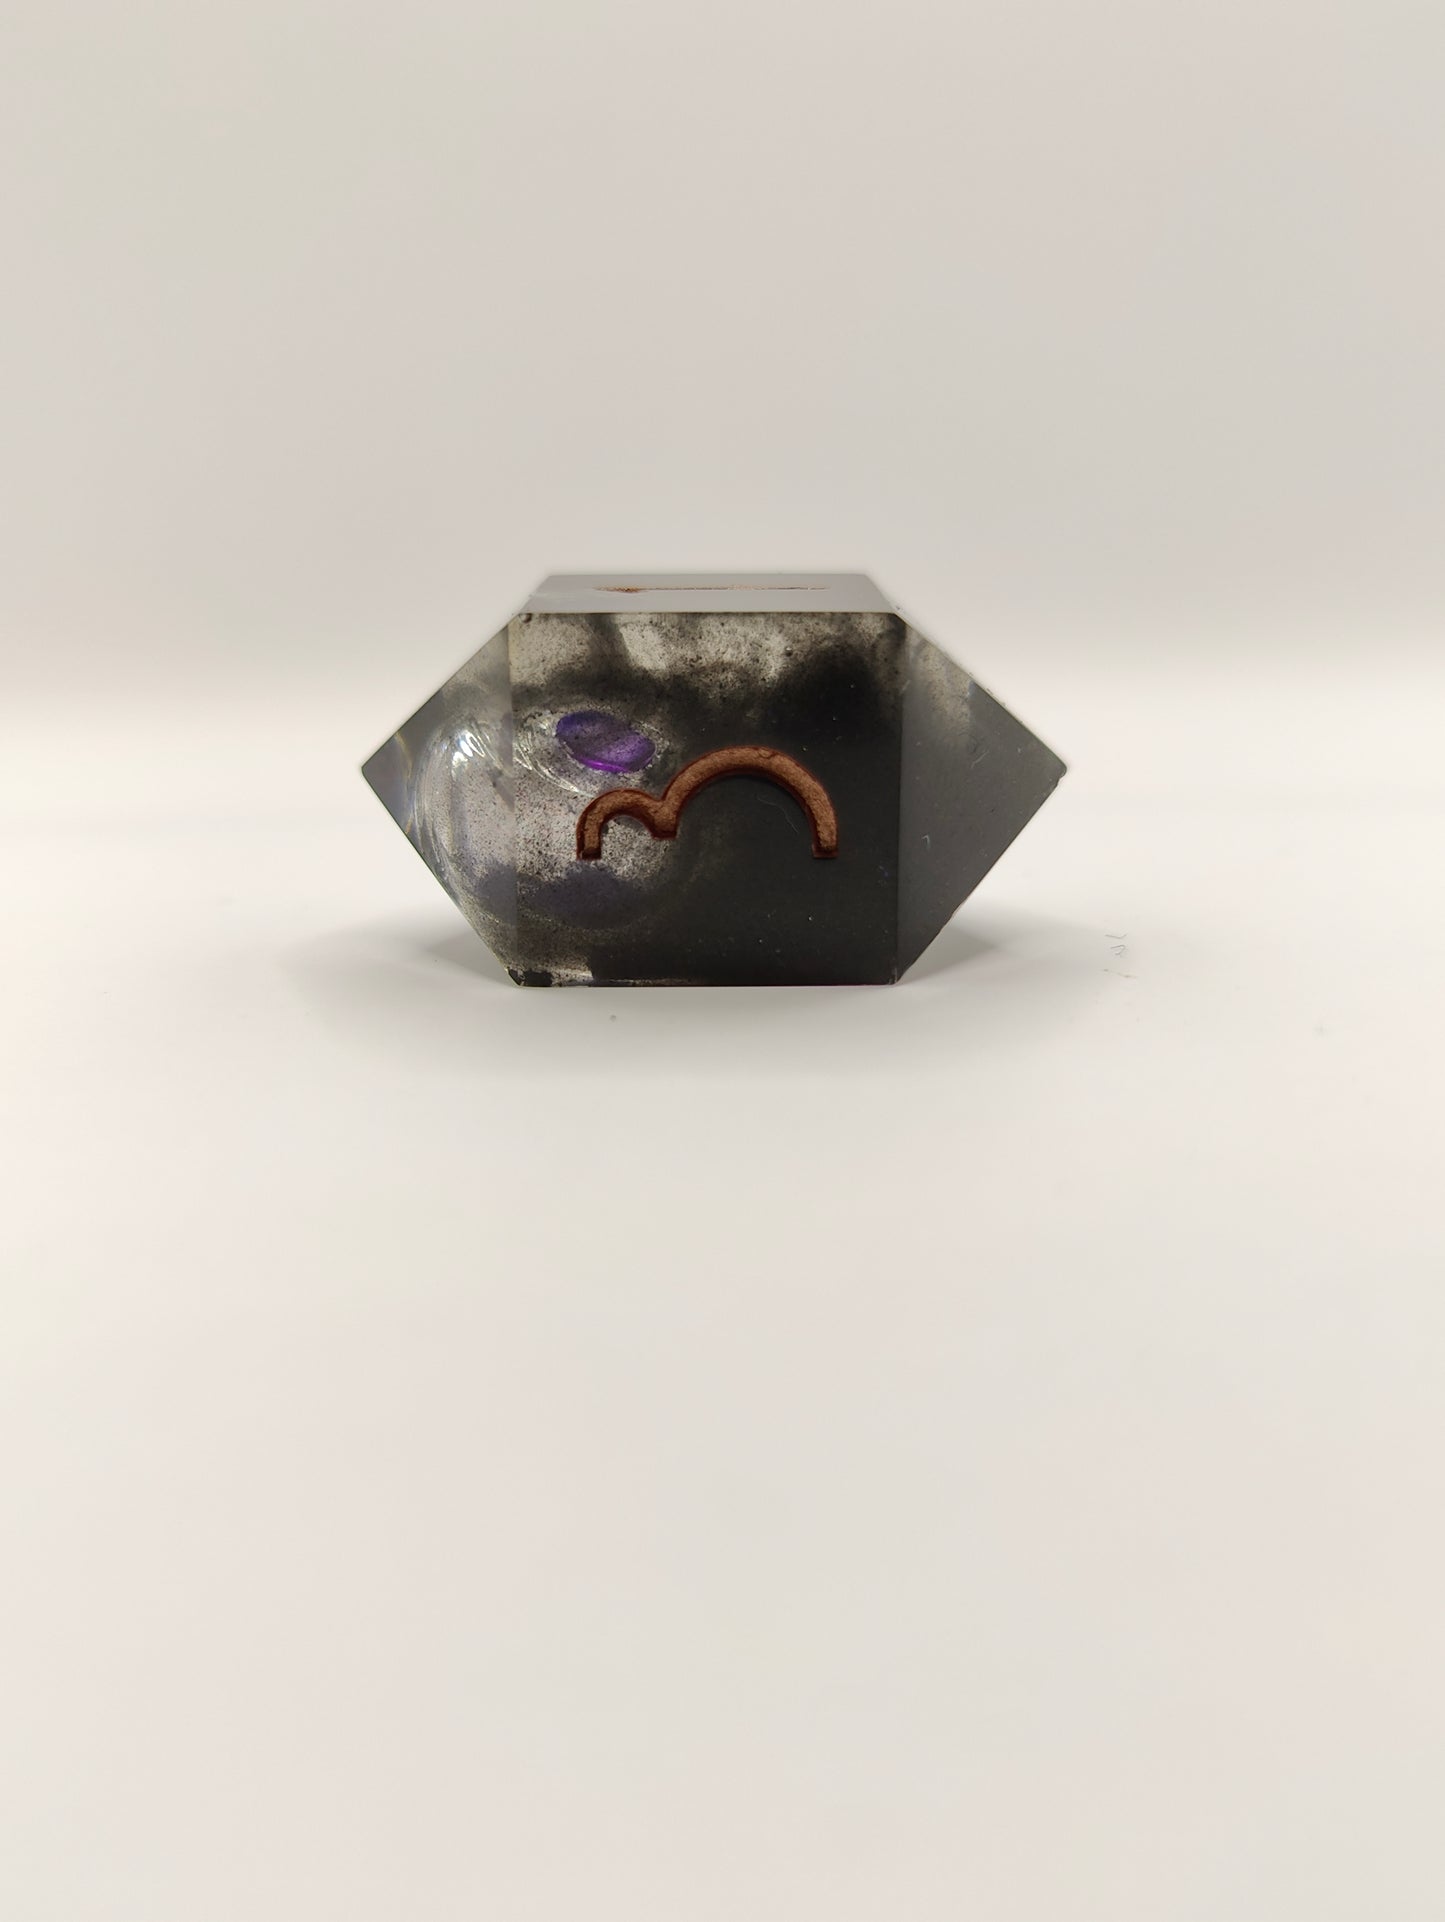 Handmade Single Crystal D4 (liquid core): Dimension door